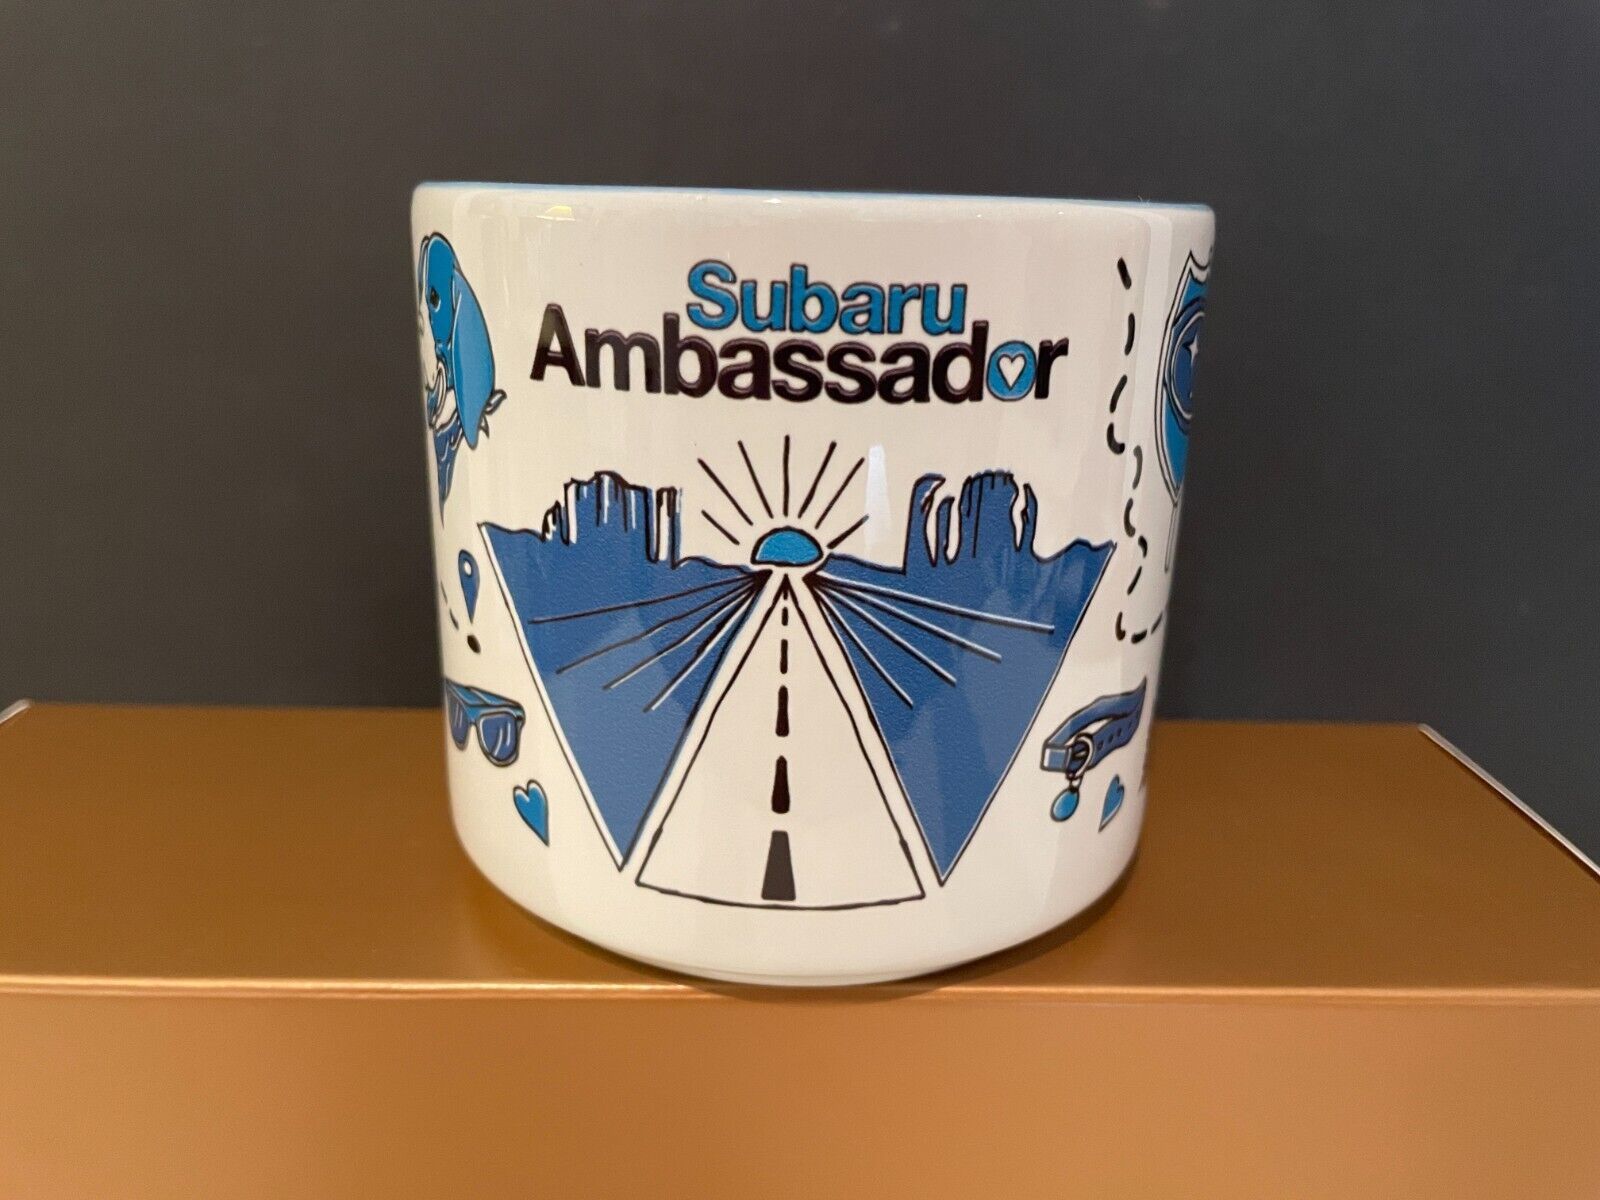 Subaru Ambassador Coffee Mug - White & Blue - Camping, Hiking, Outdoors